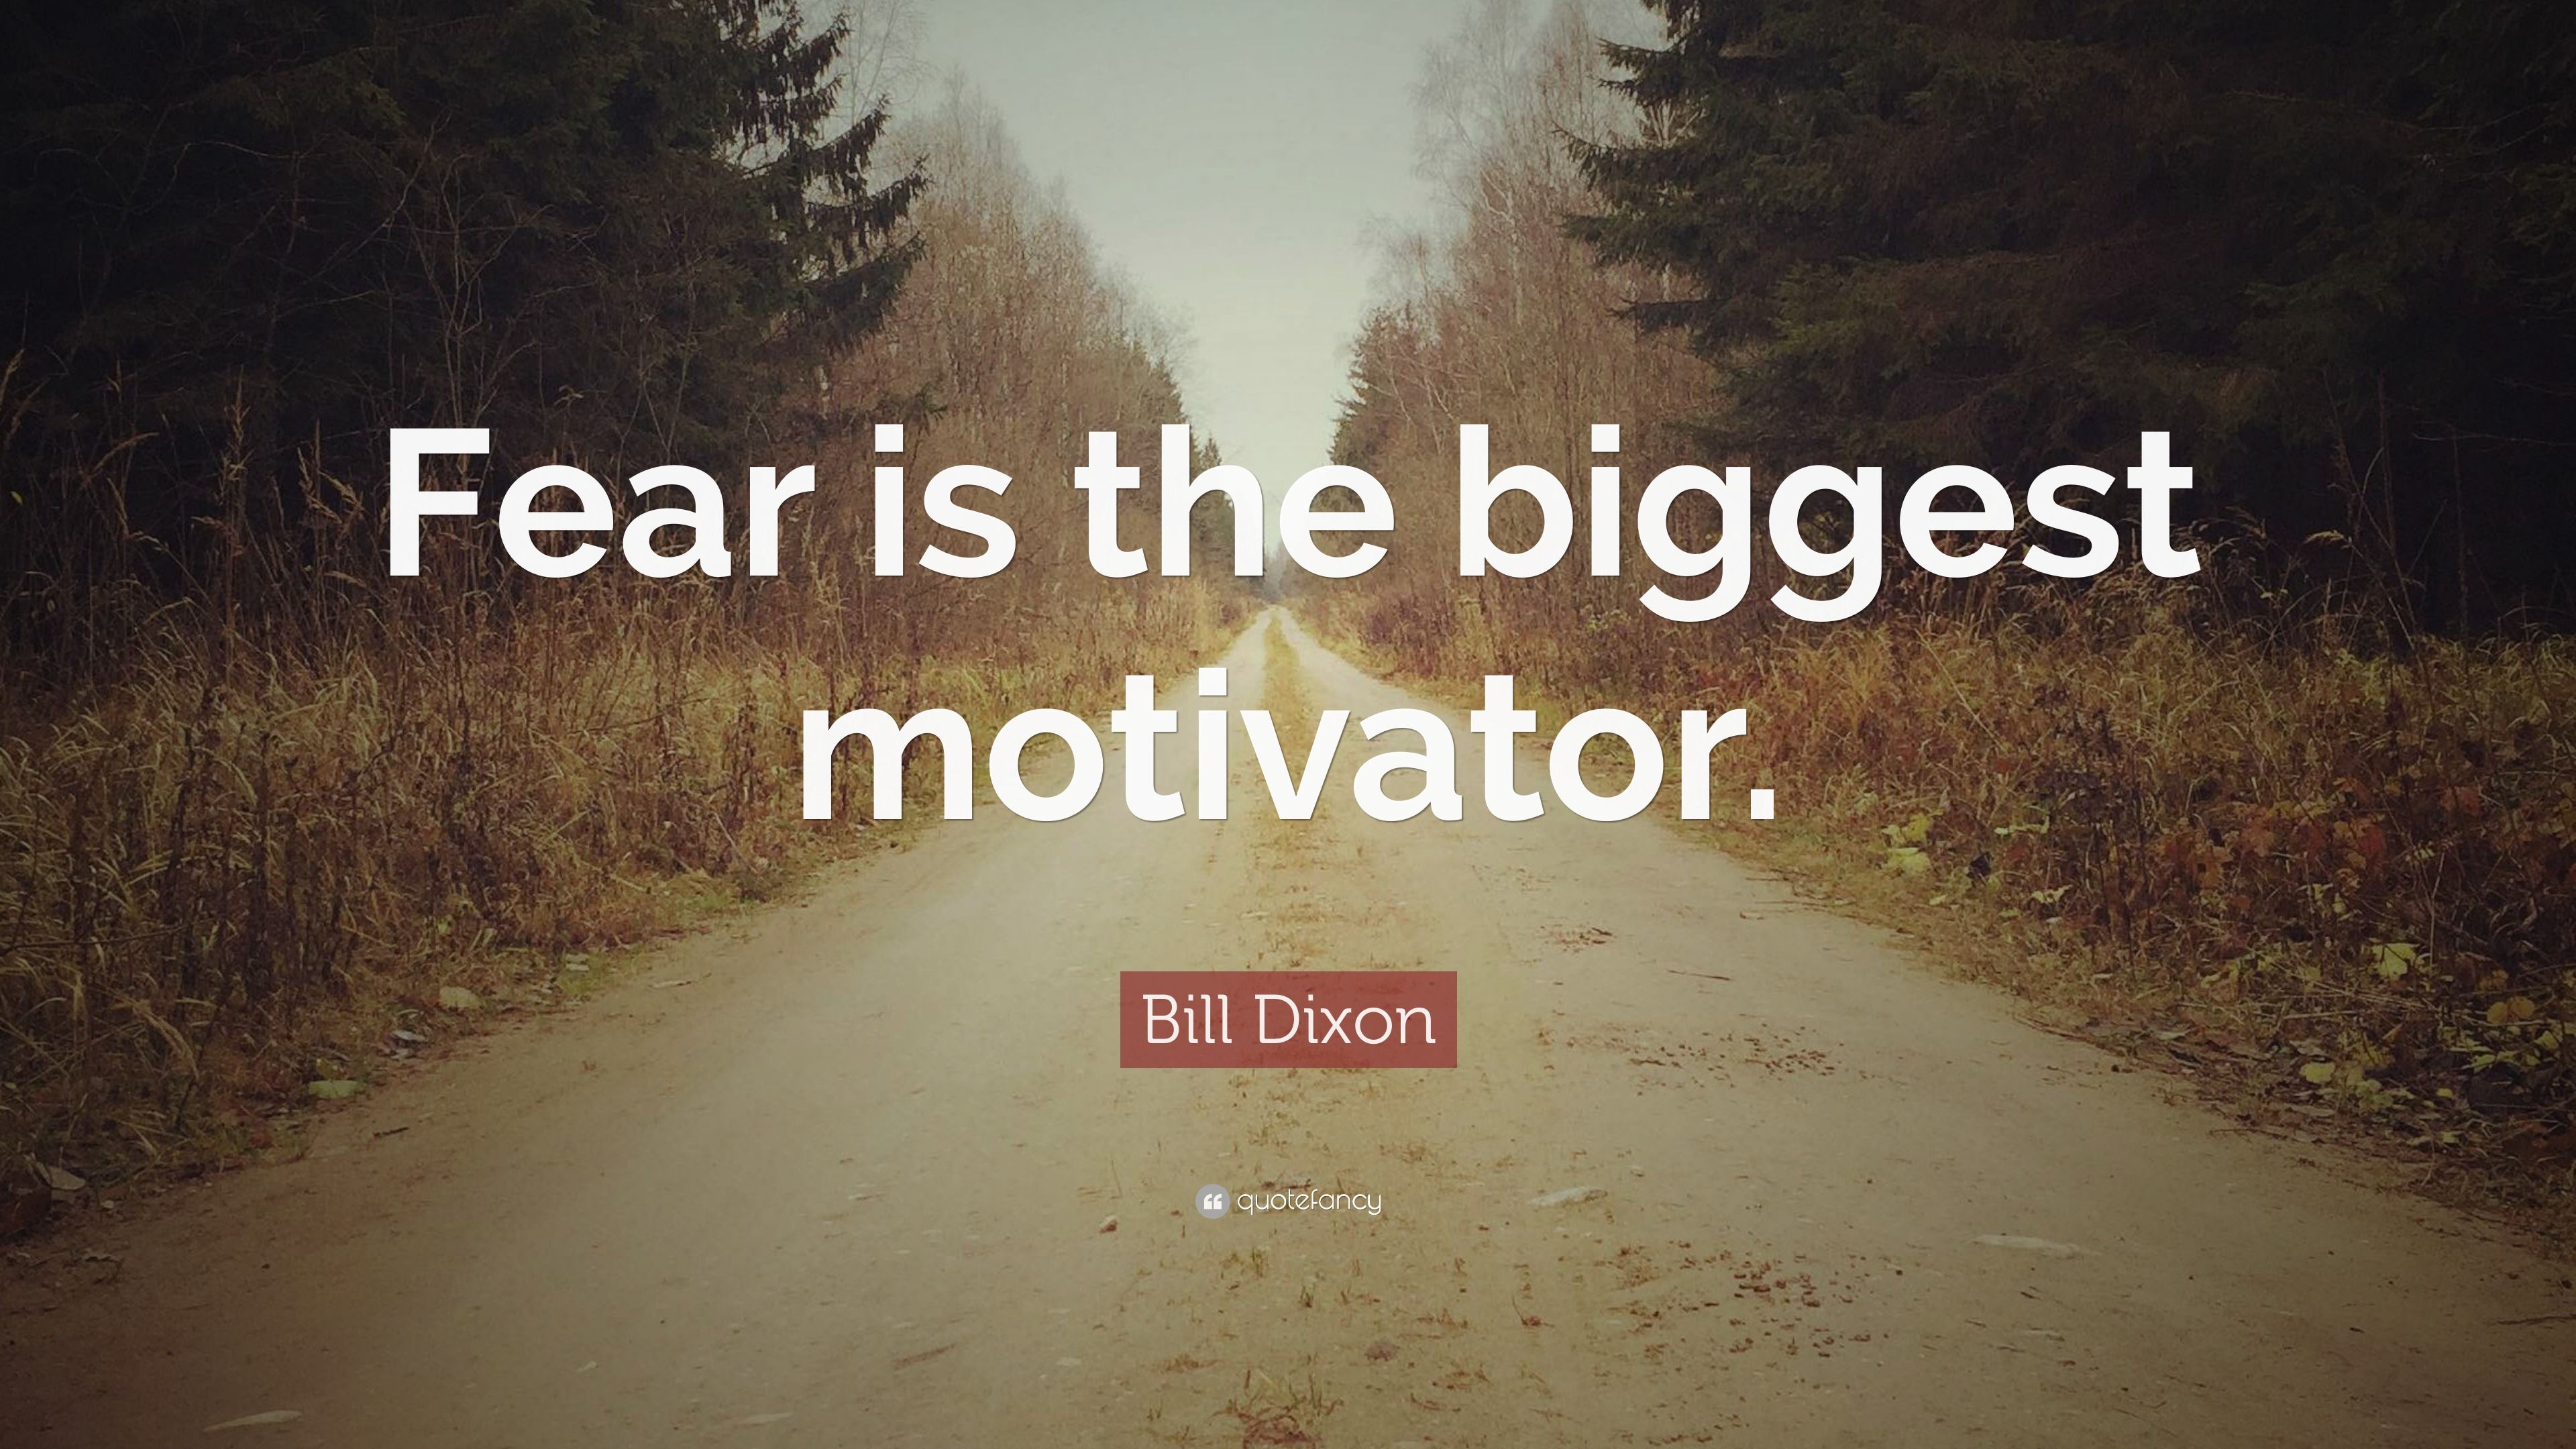 Bill Dixon Quote: “Fear is the biggest motivator.”